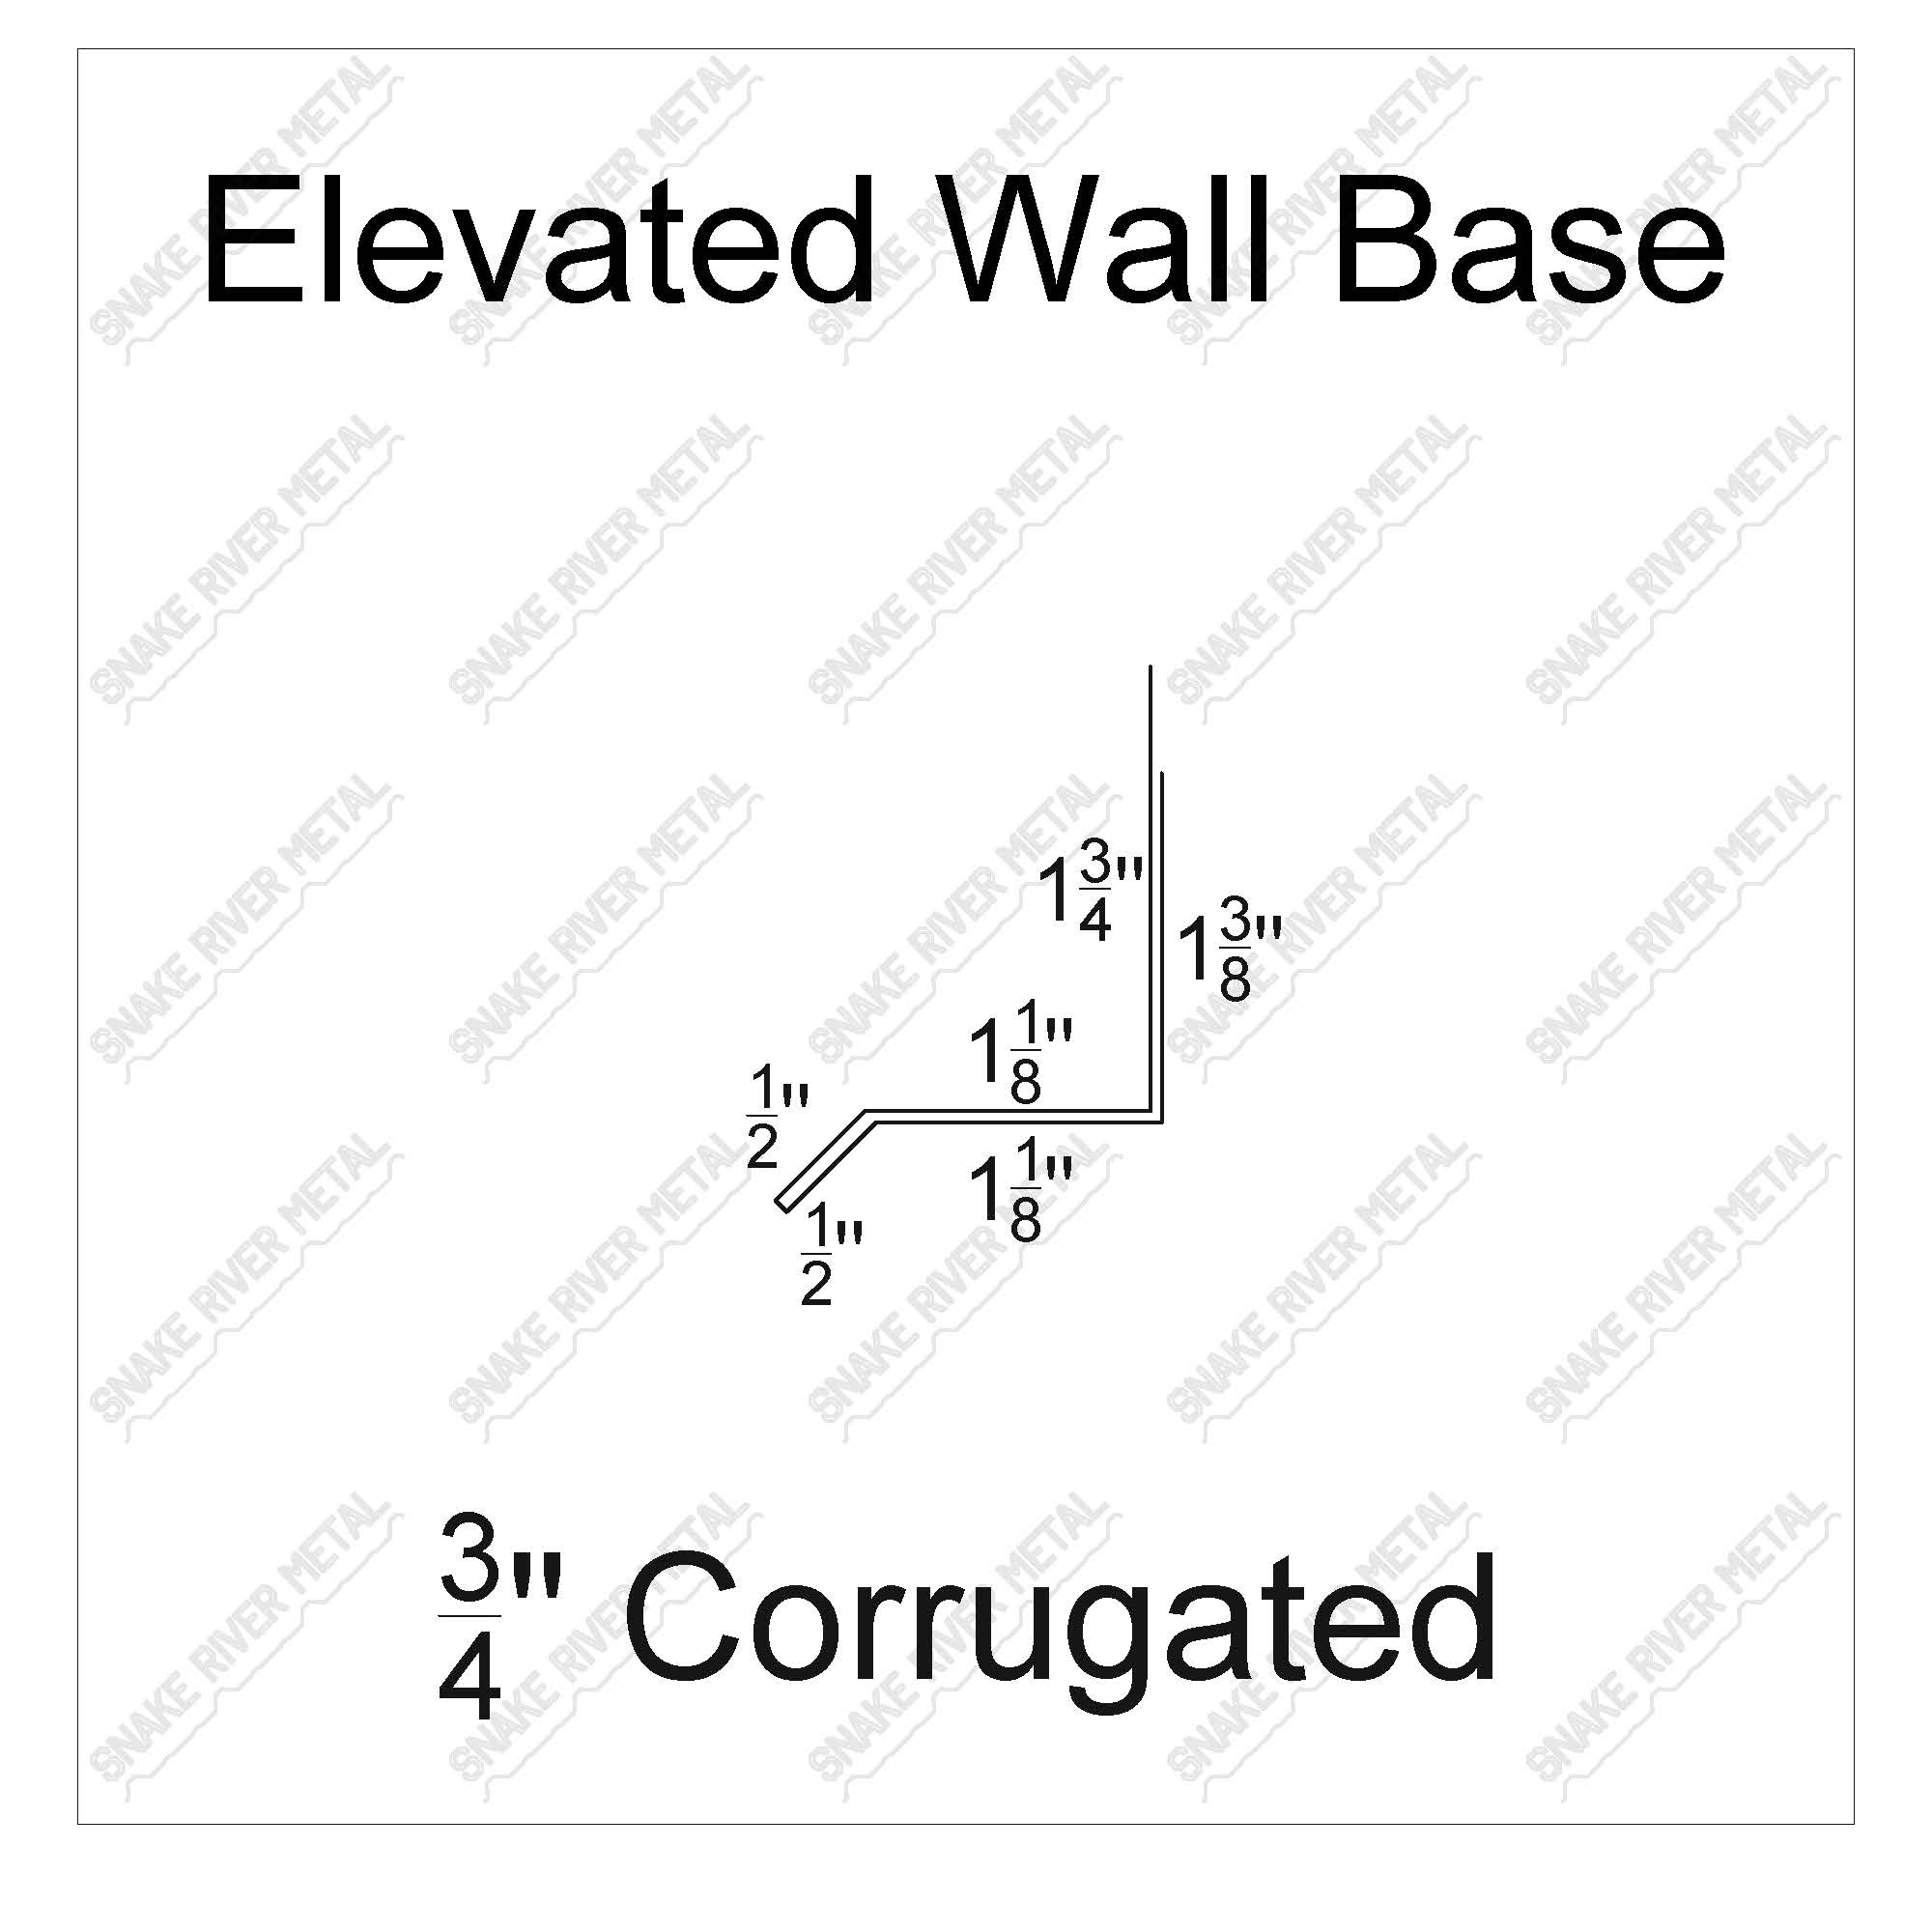 Elevated Wall Base - Corrugated Trim